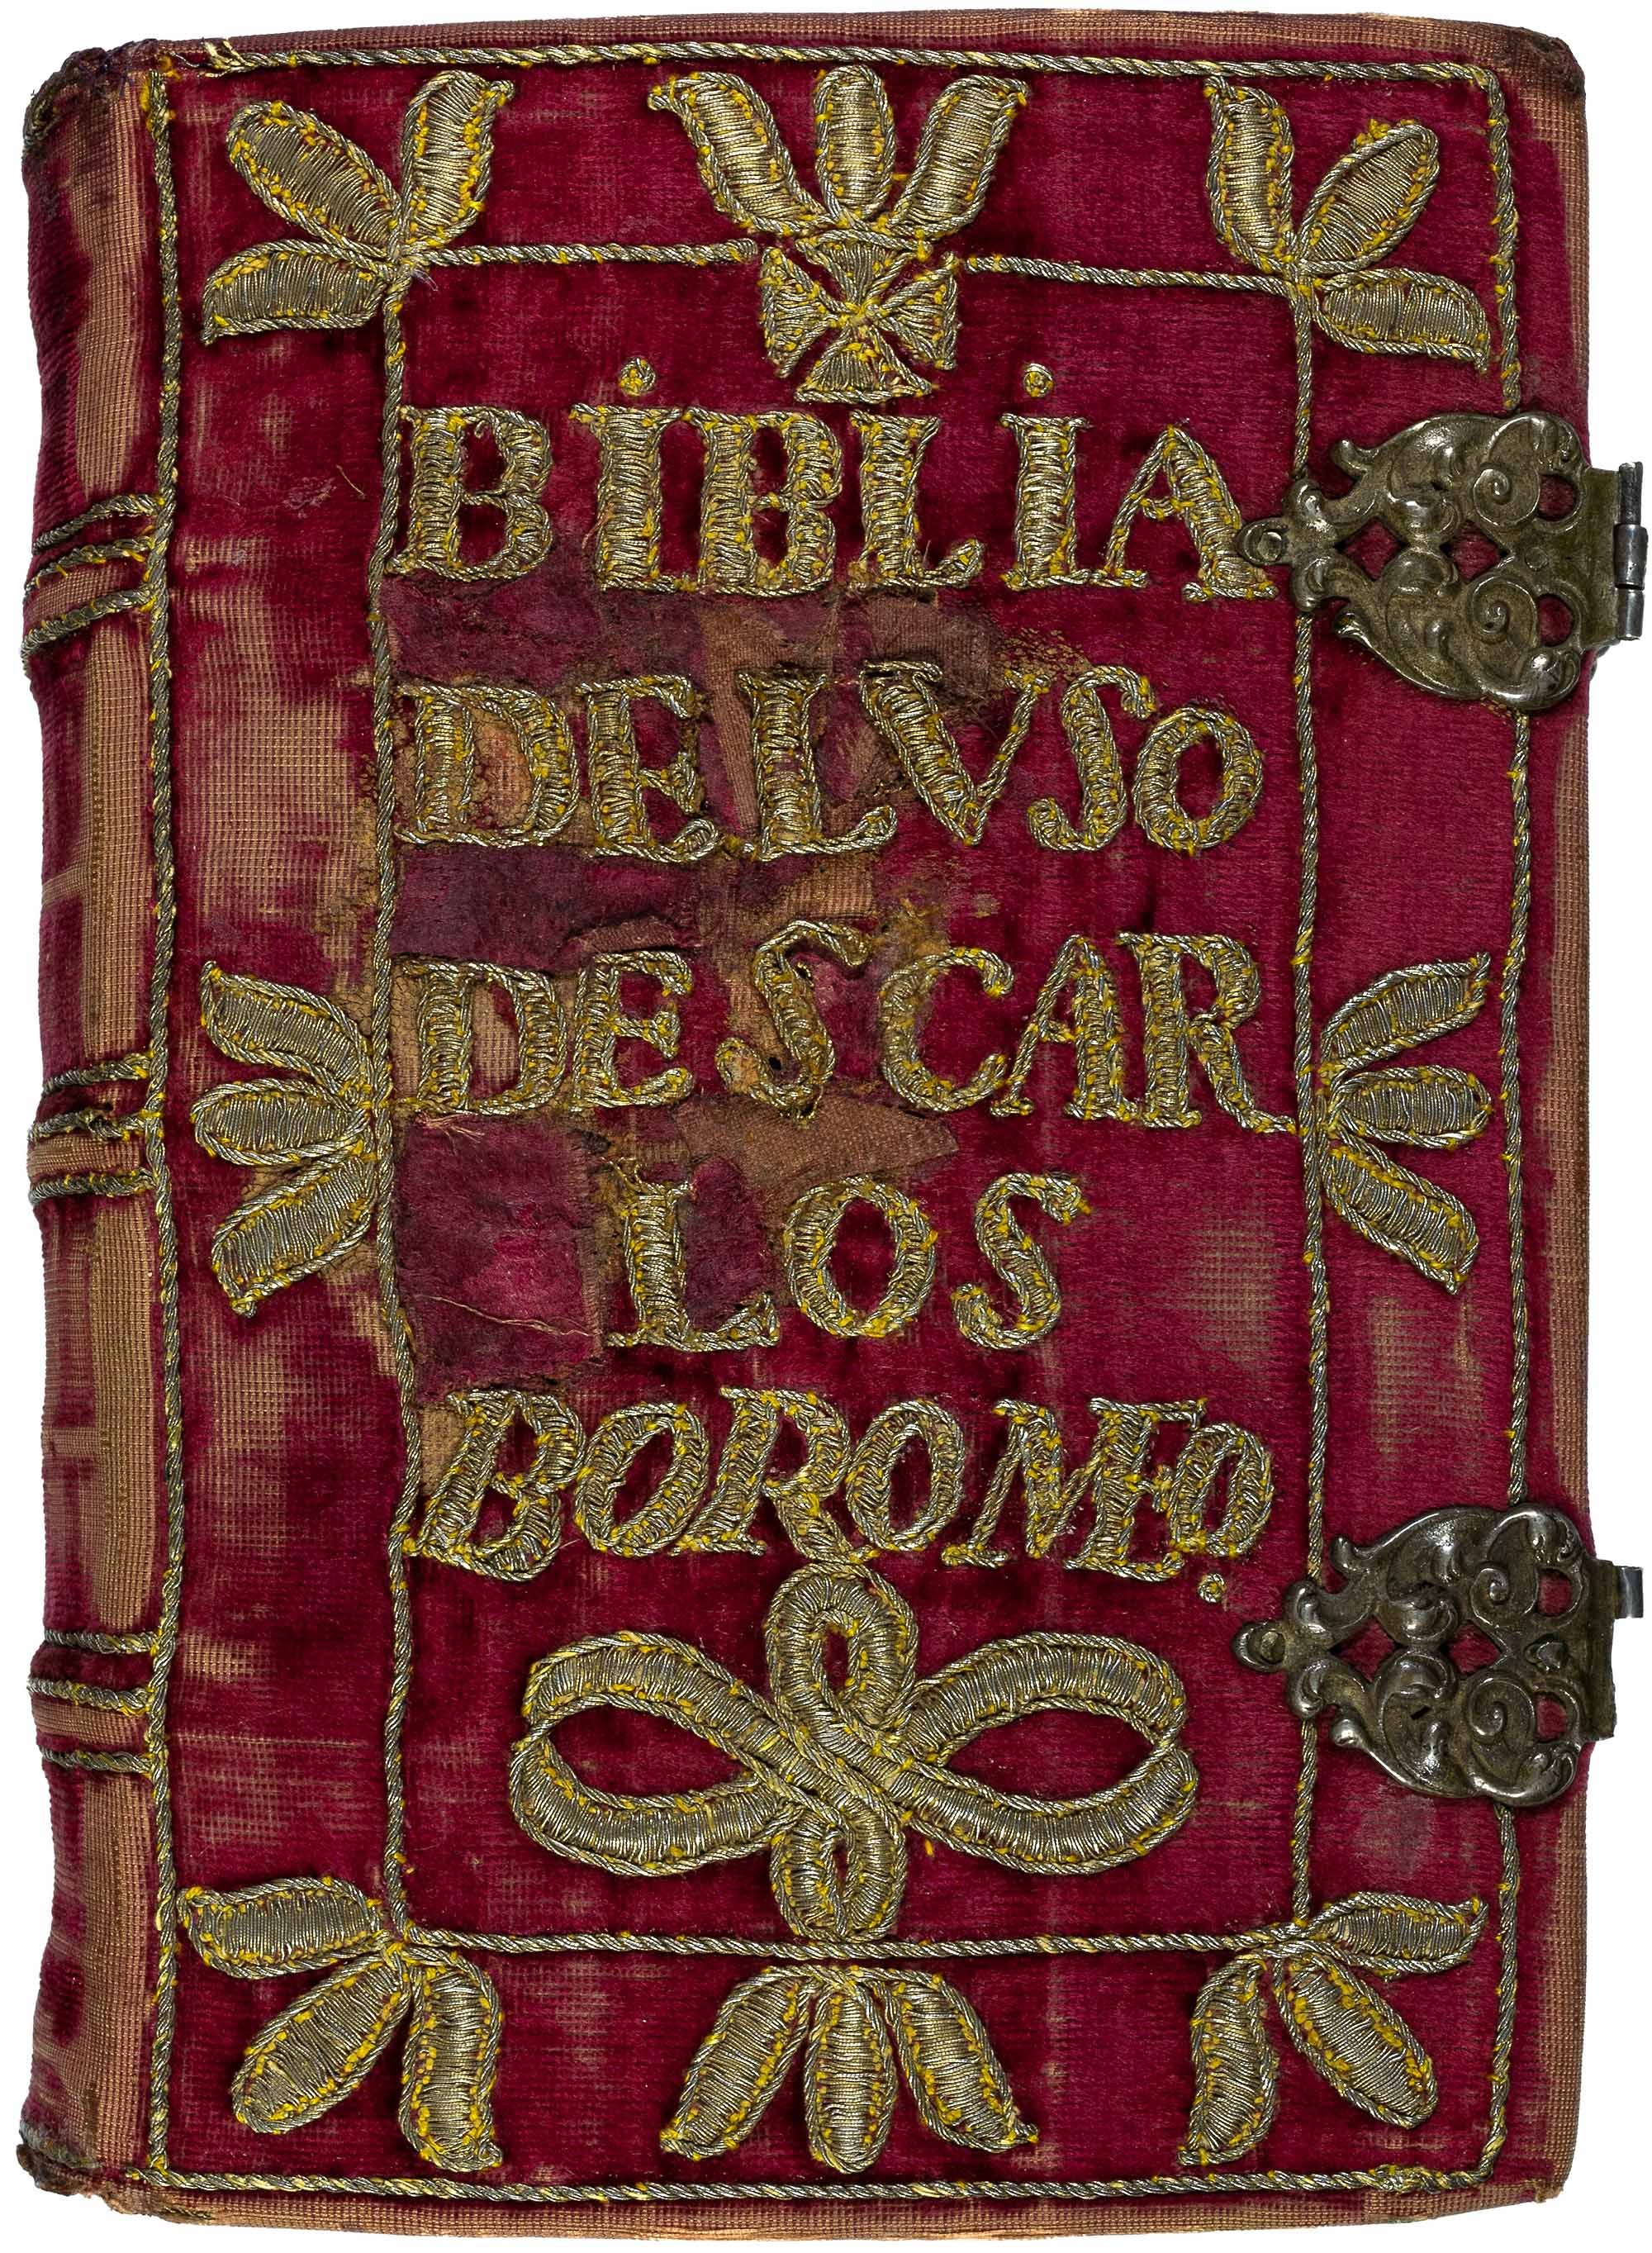 Saint-Carlo-Borromeo-reliquary-bible-plantin-1565-silk-04.jpg